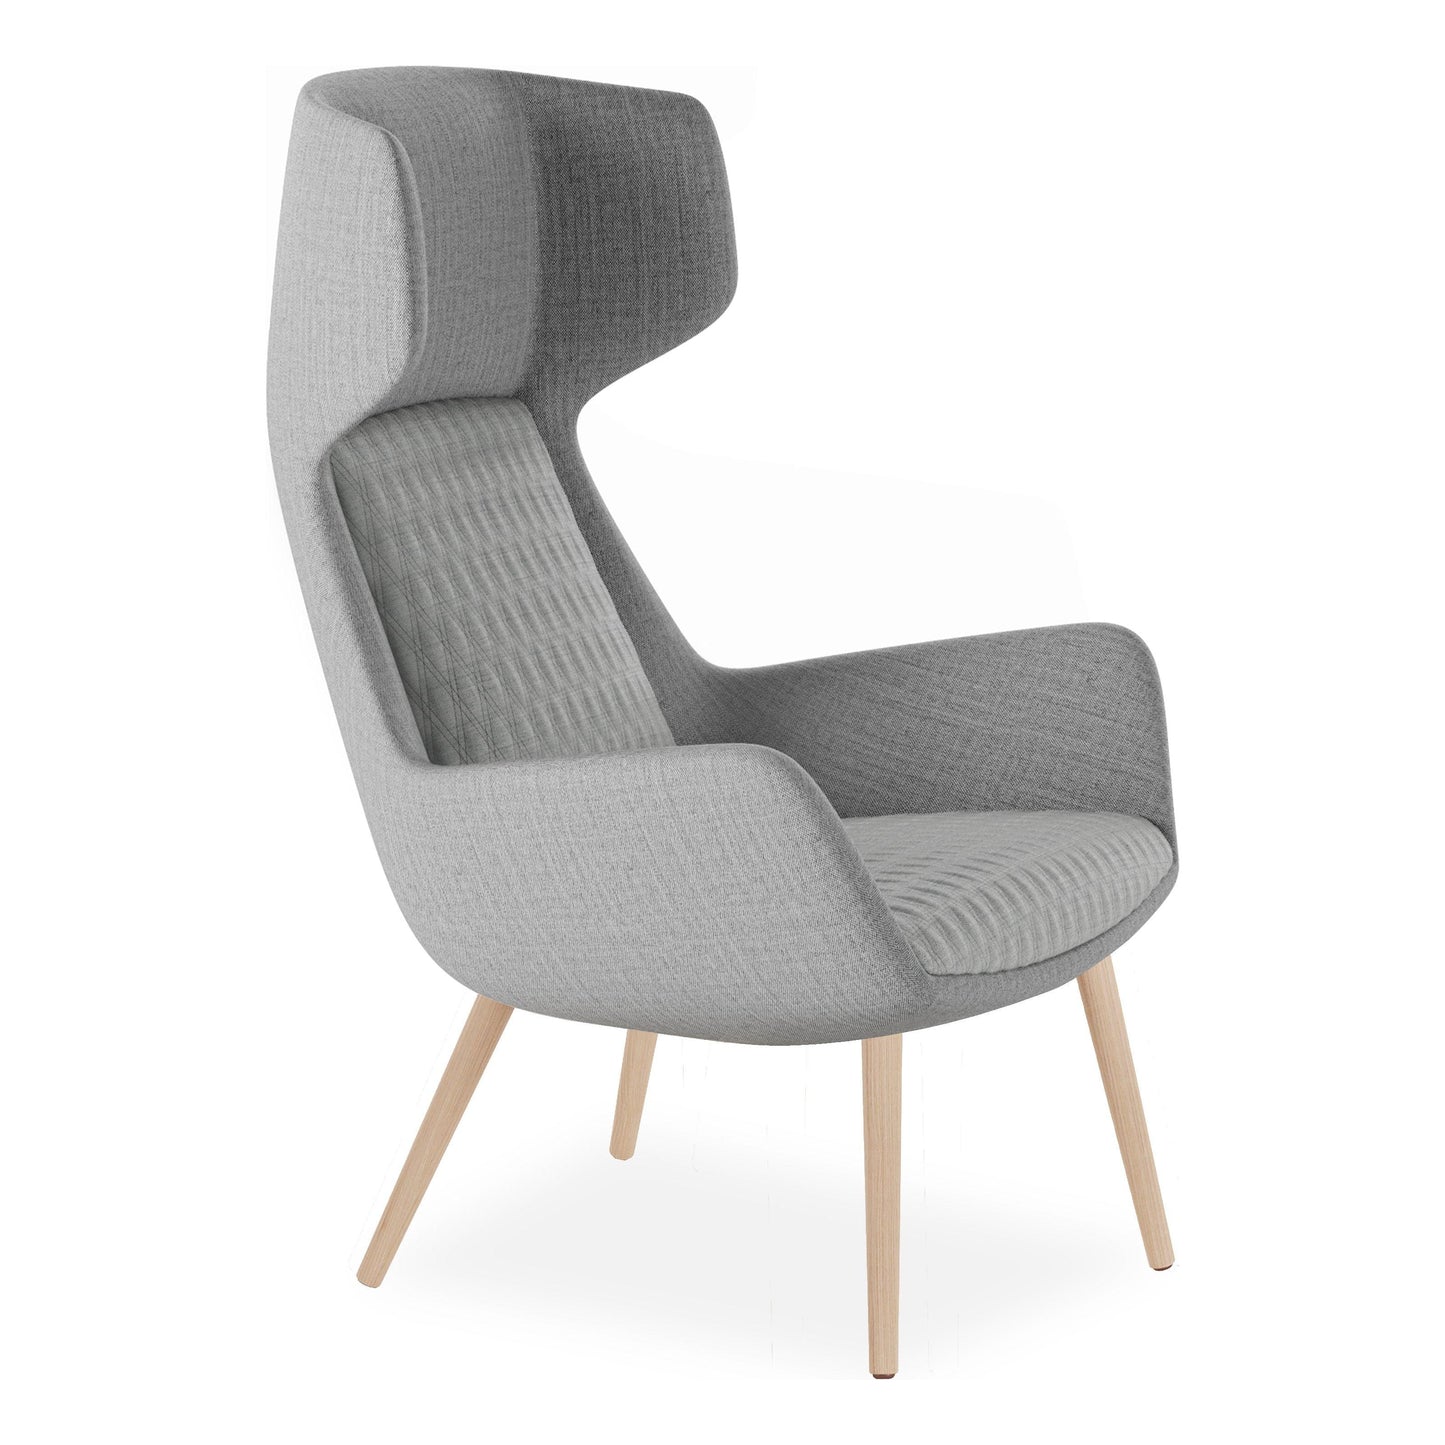 Aquila Single Seater High Back Office Lounge - Office Furniture Company 